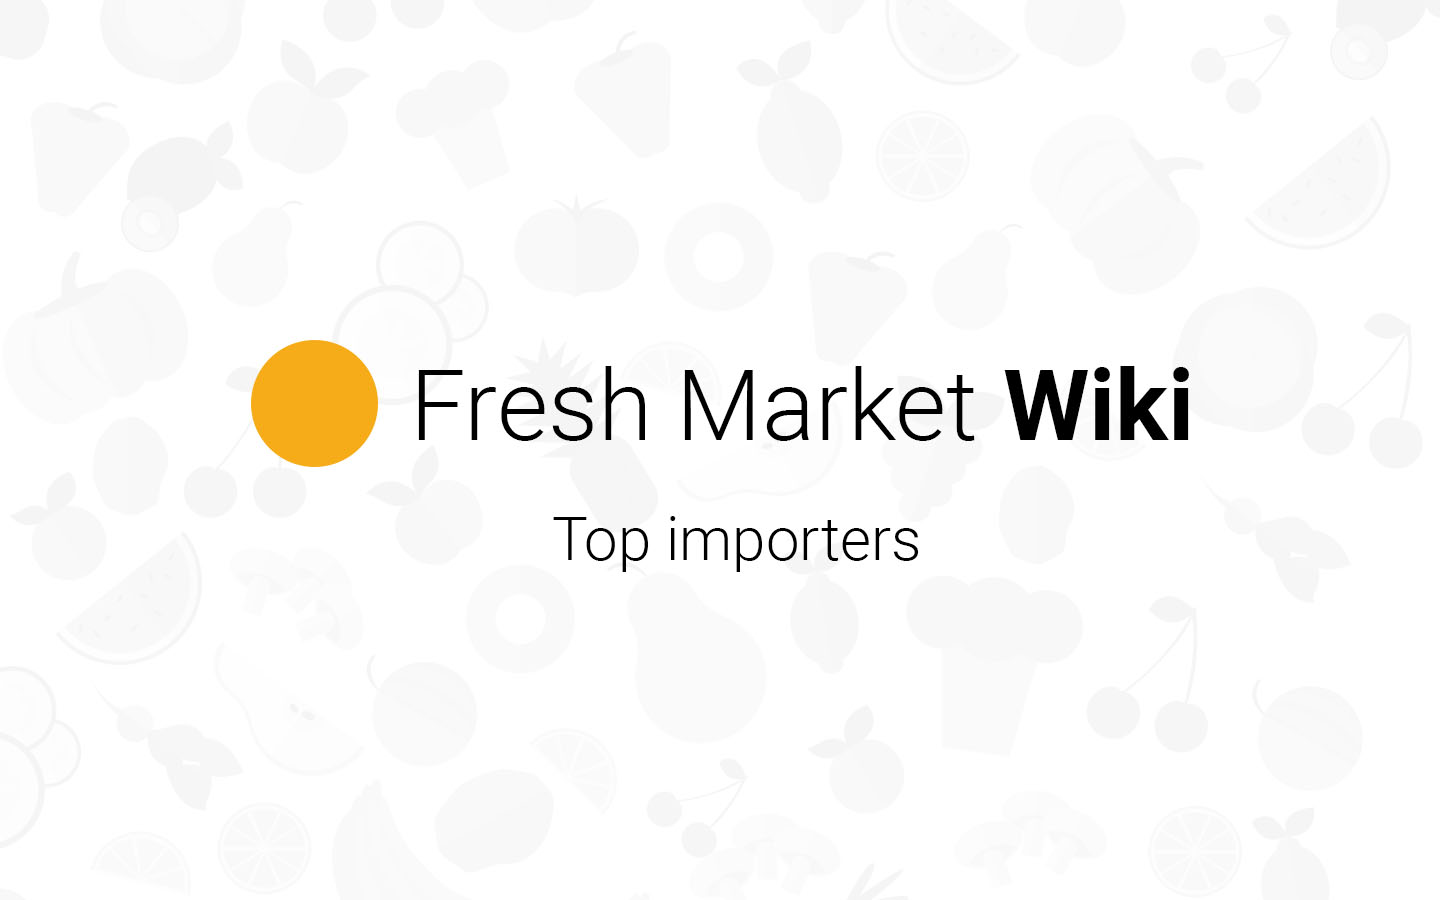 Fresh Market Top Importers